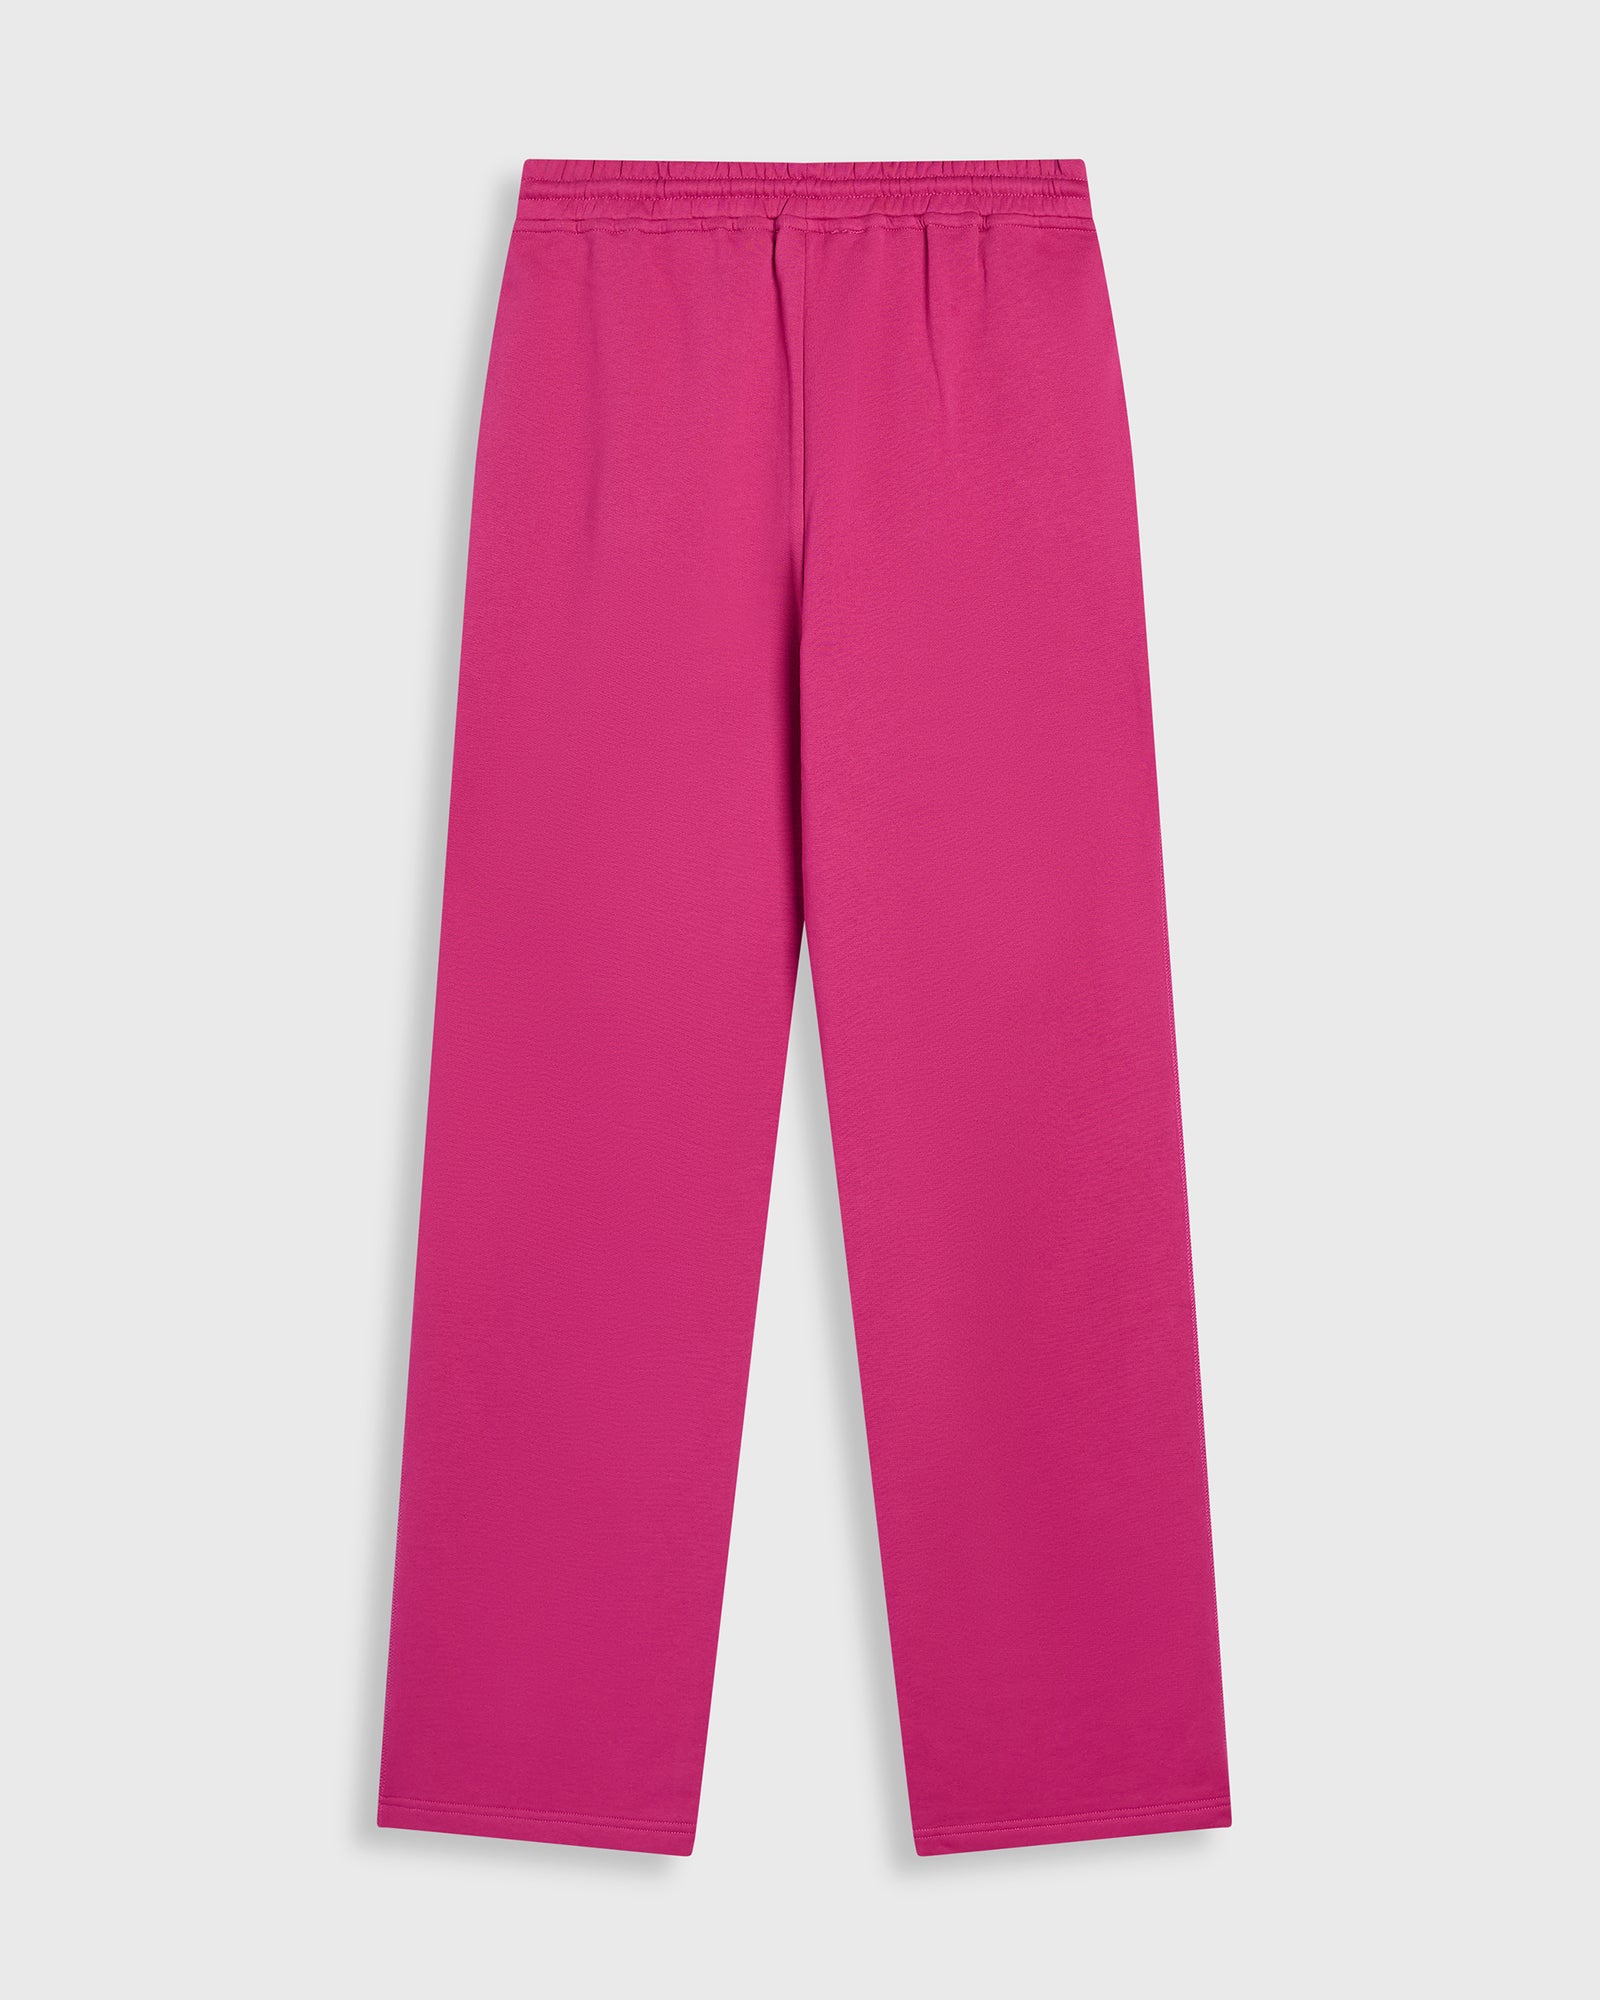 Hot pink coral pull-on sweatpants by Krost sweat pants for men & women unisex sweat set